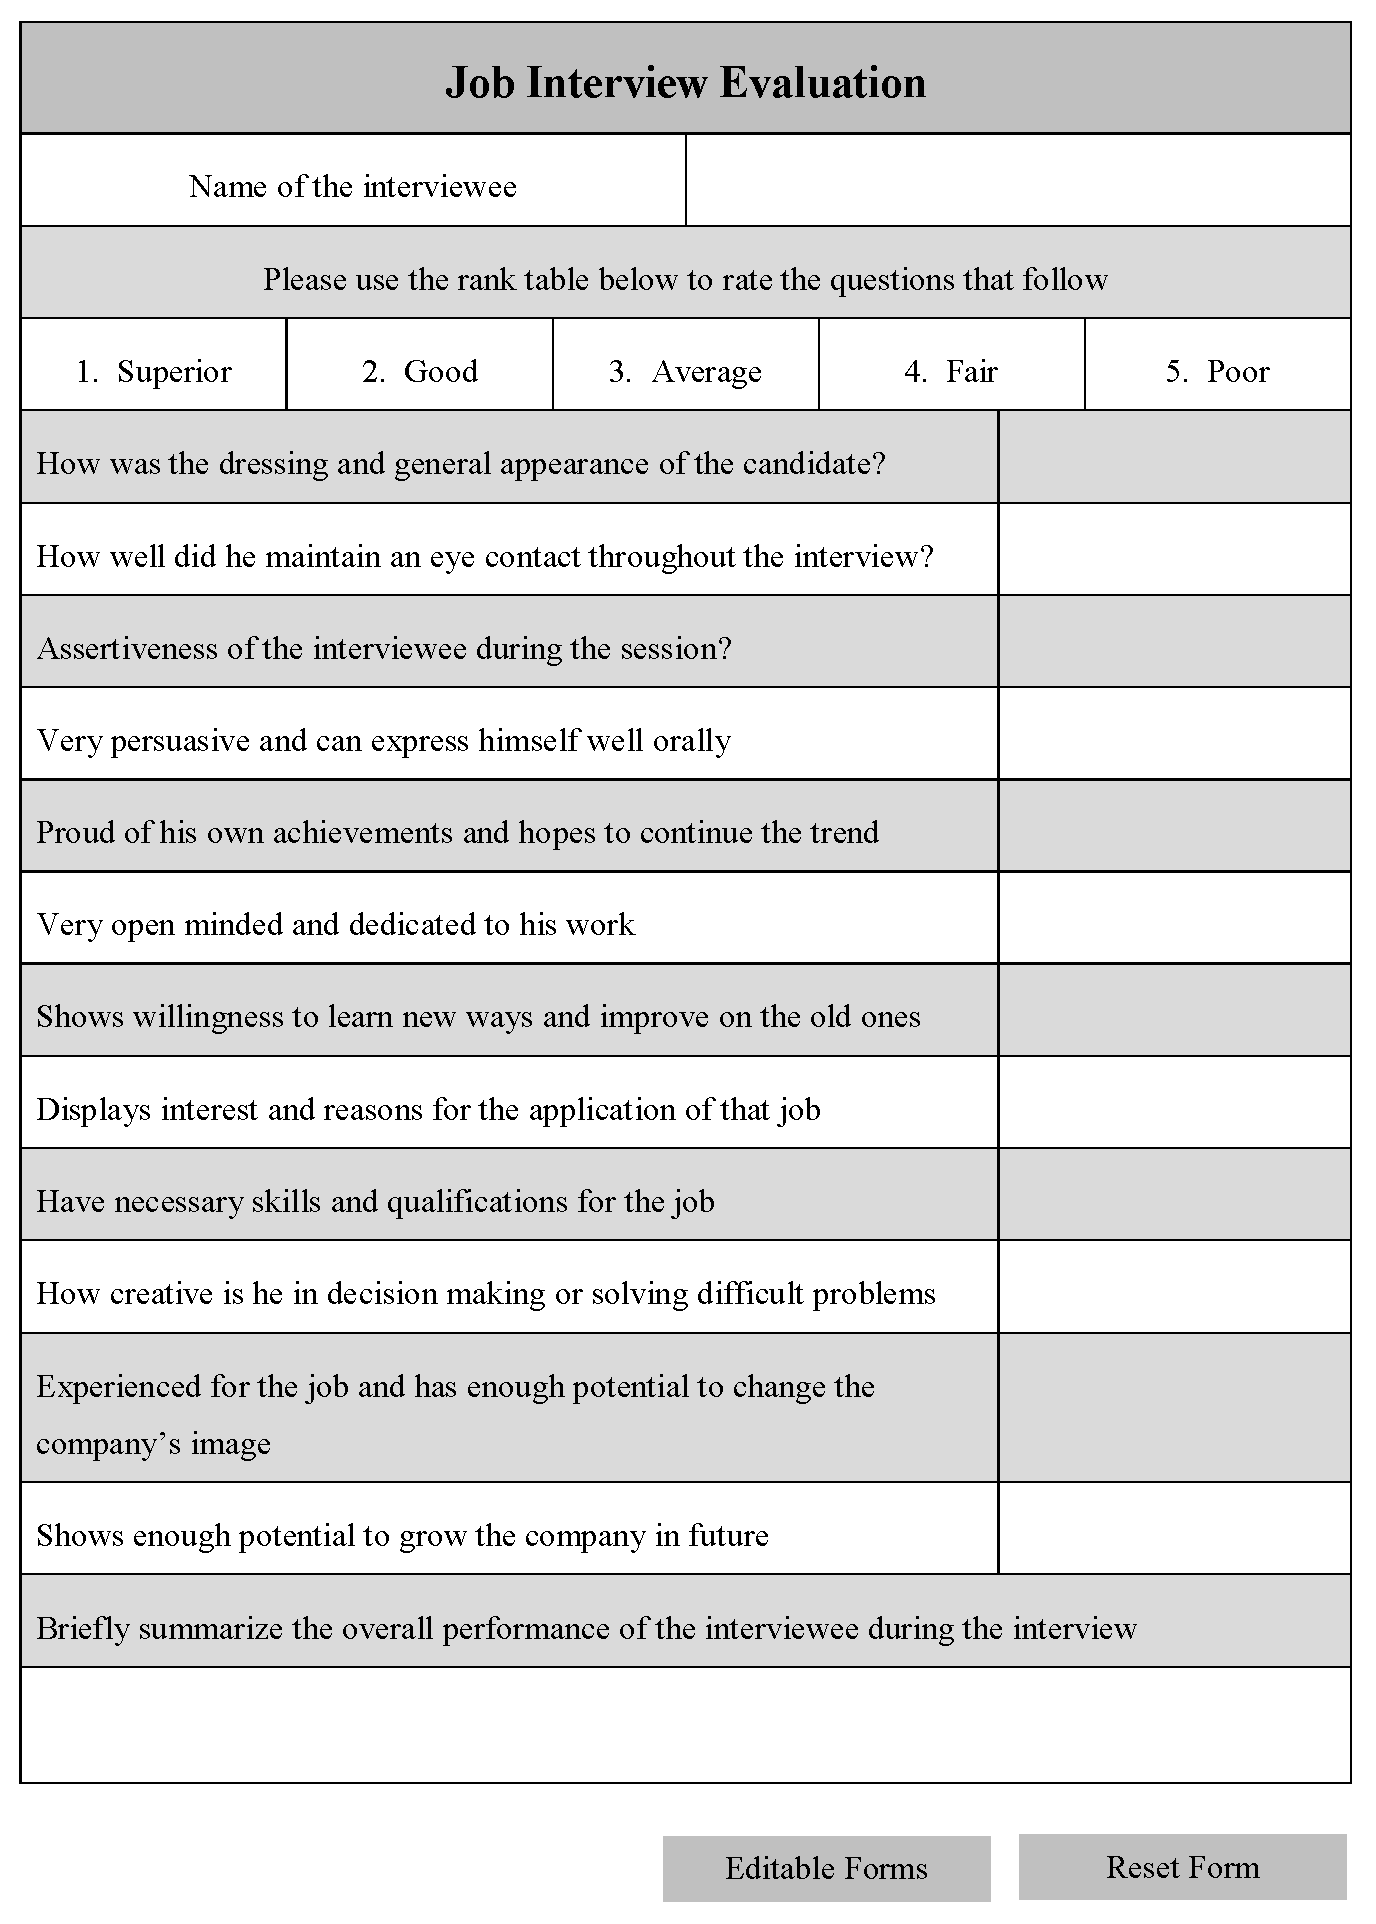 Job Interview Evaluation Form Editable PDF Forms